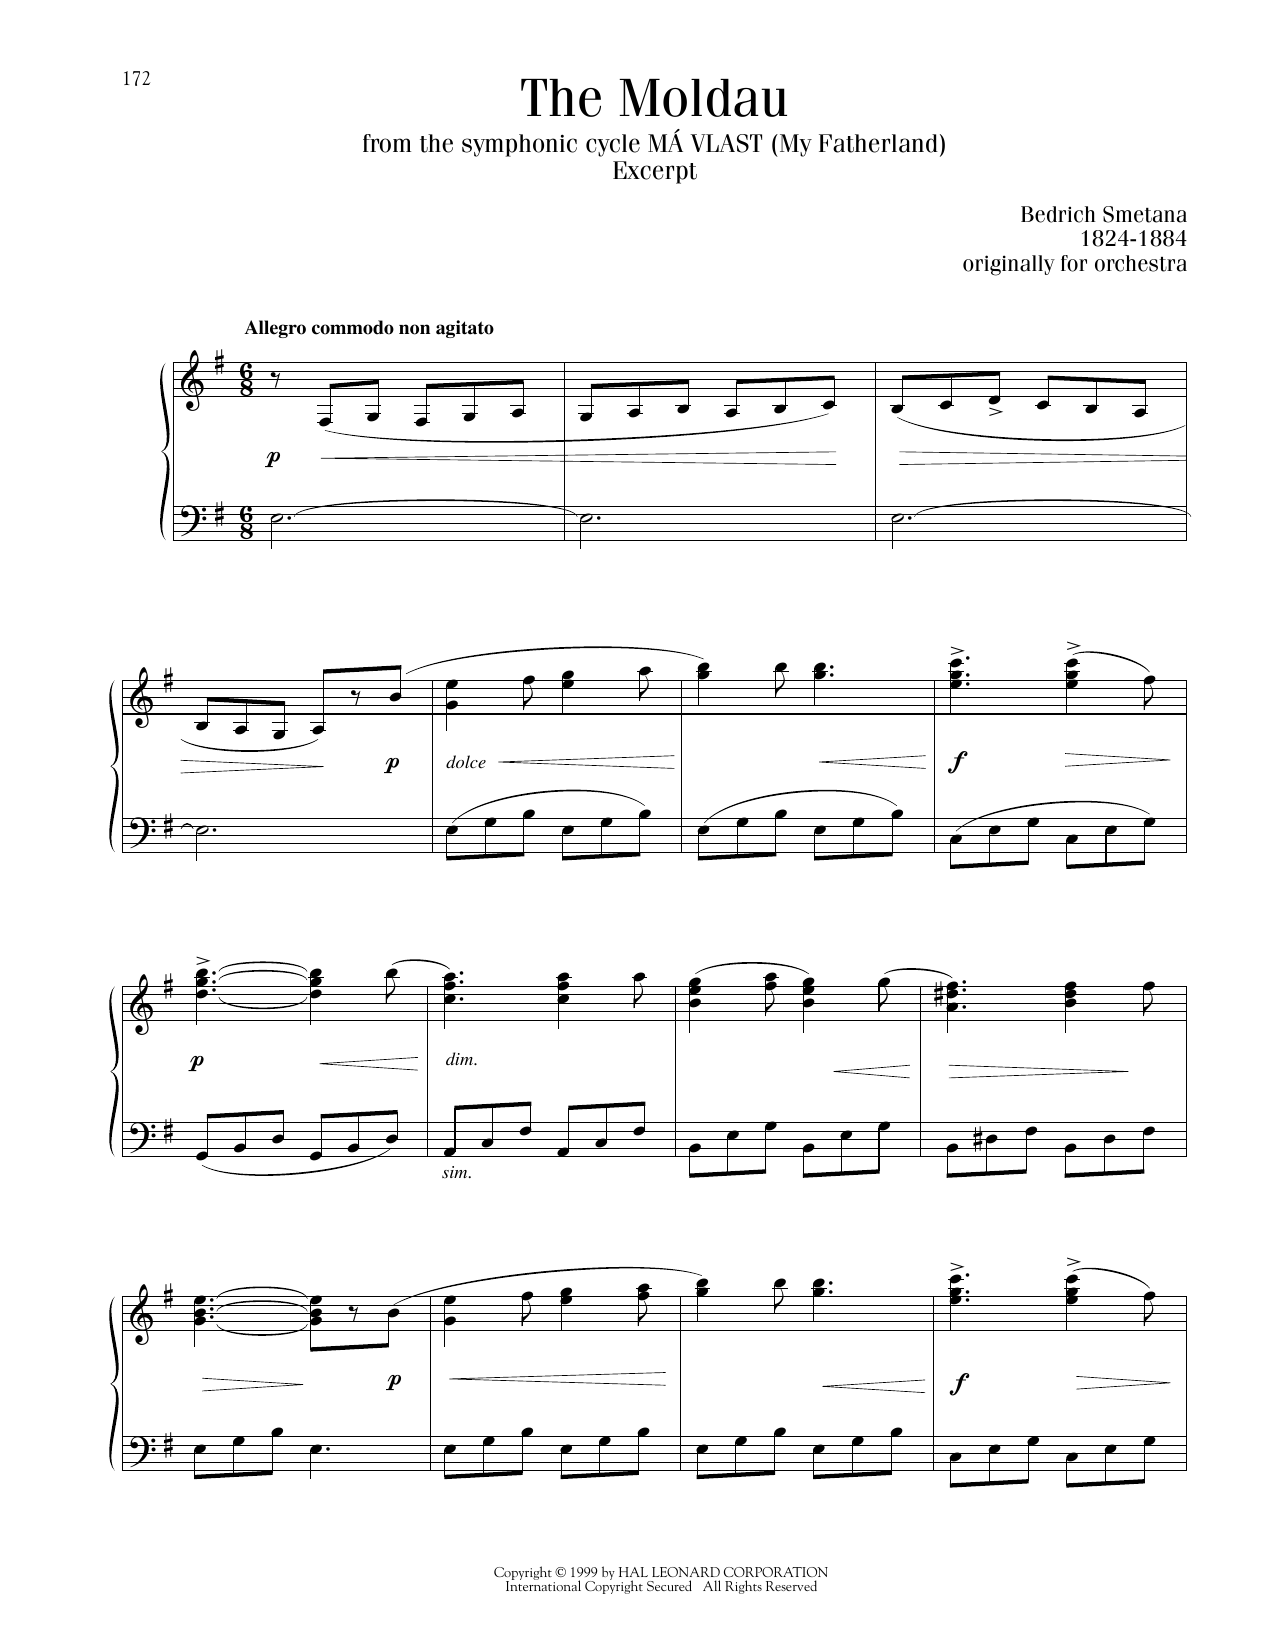 Bedrich Smetana The Moldau sheet music notes printable PDF score